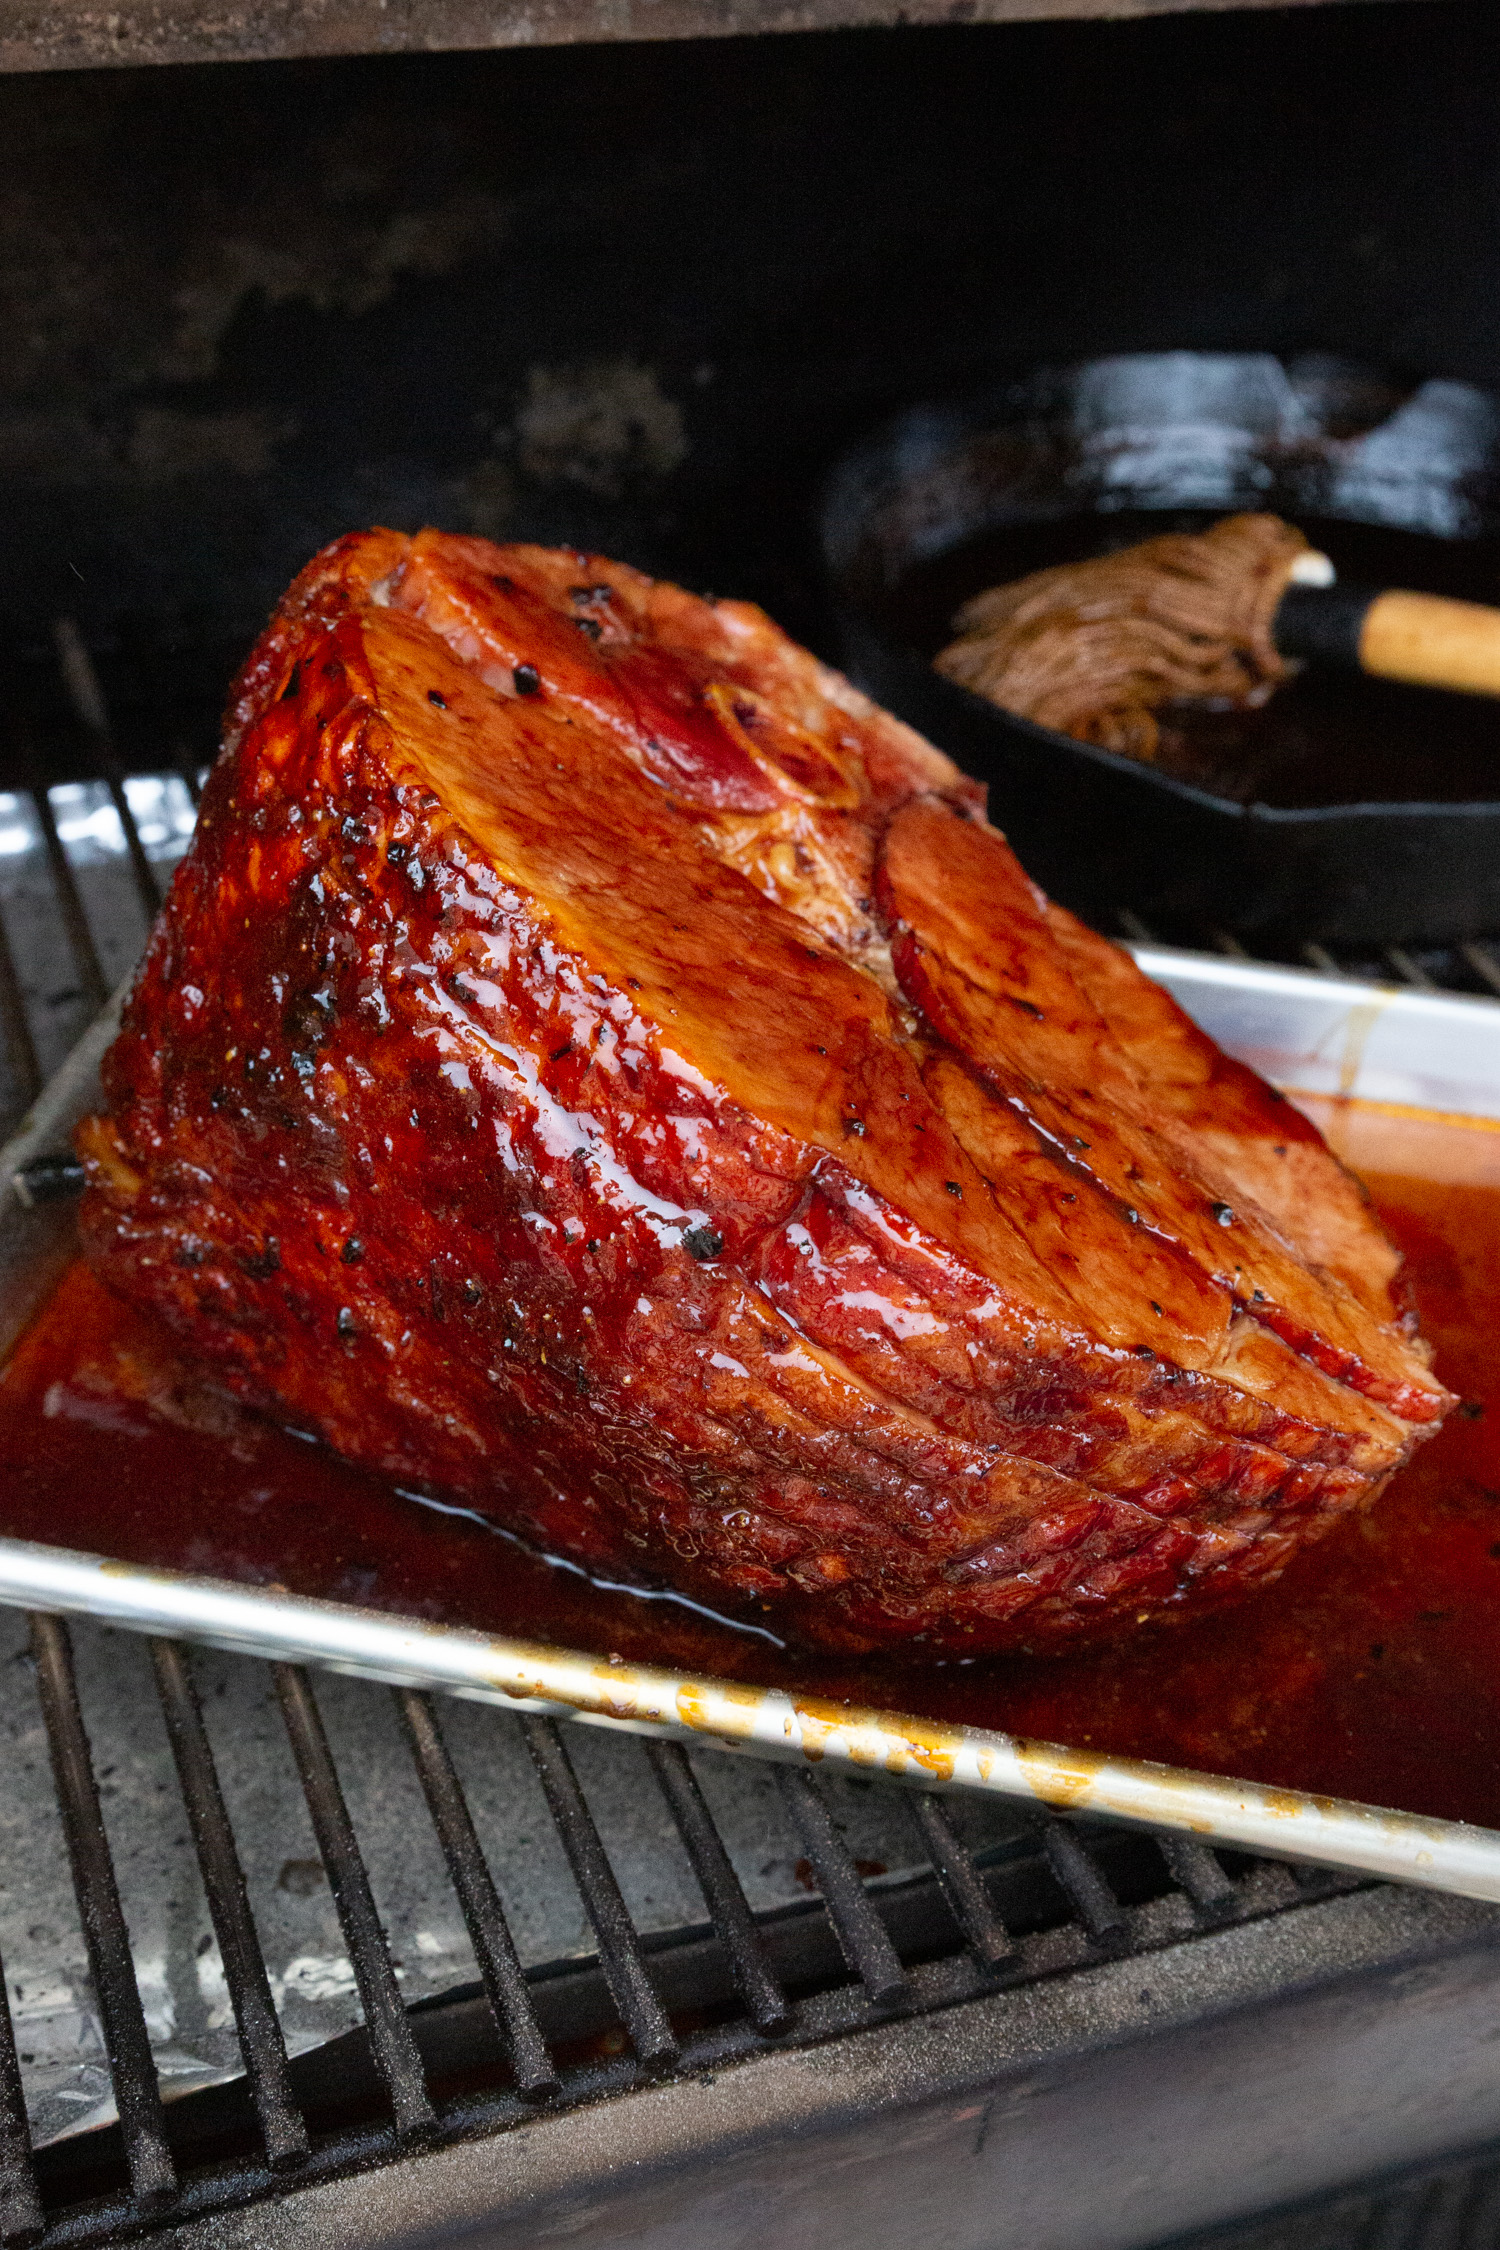 A smoked ham glazed with a bright red glaze sitting on a smoker.